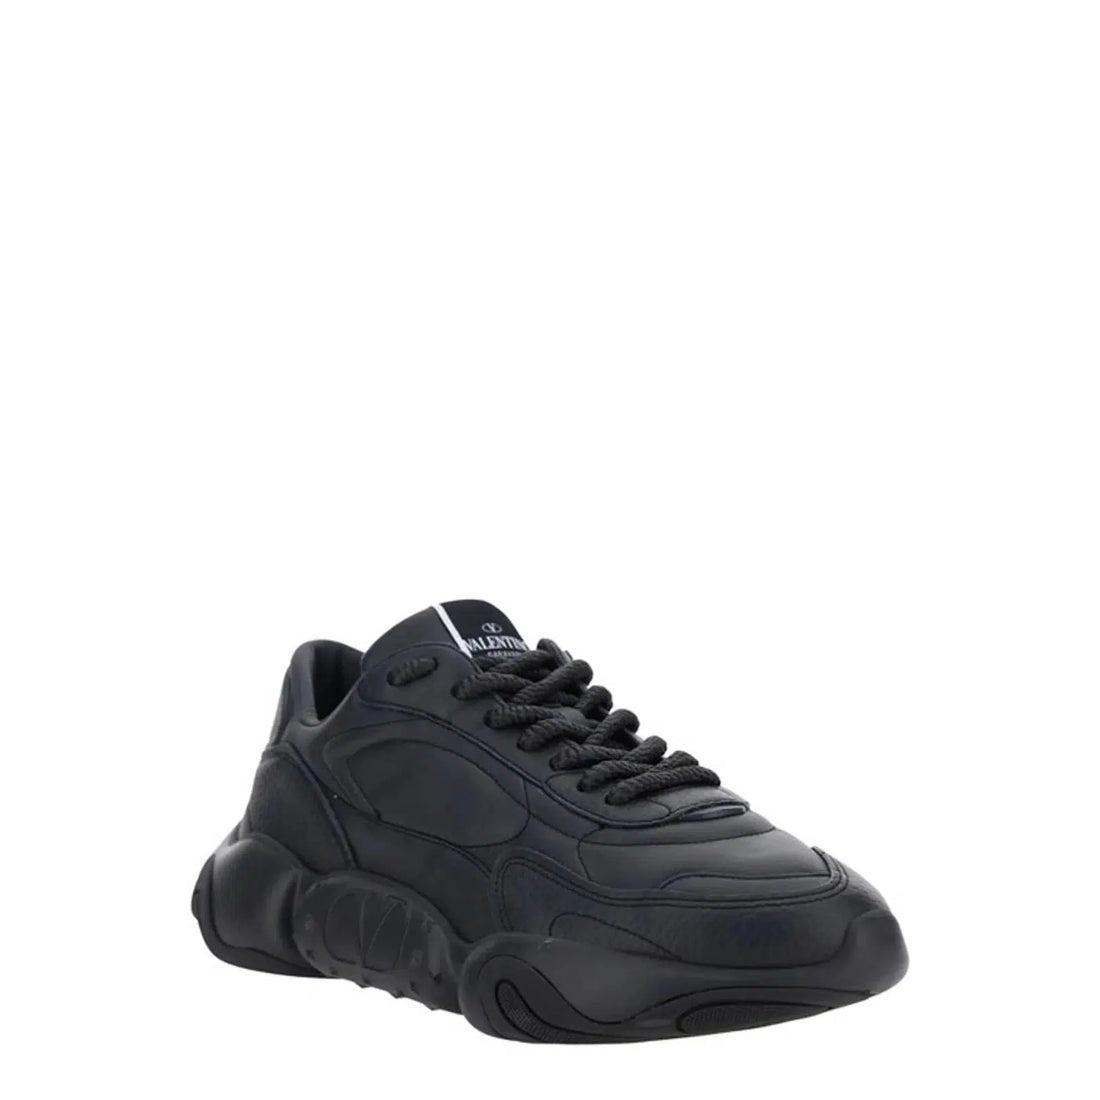 Valentino Black Calf Leather Garavani Sneakers - Paris Deluxe